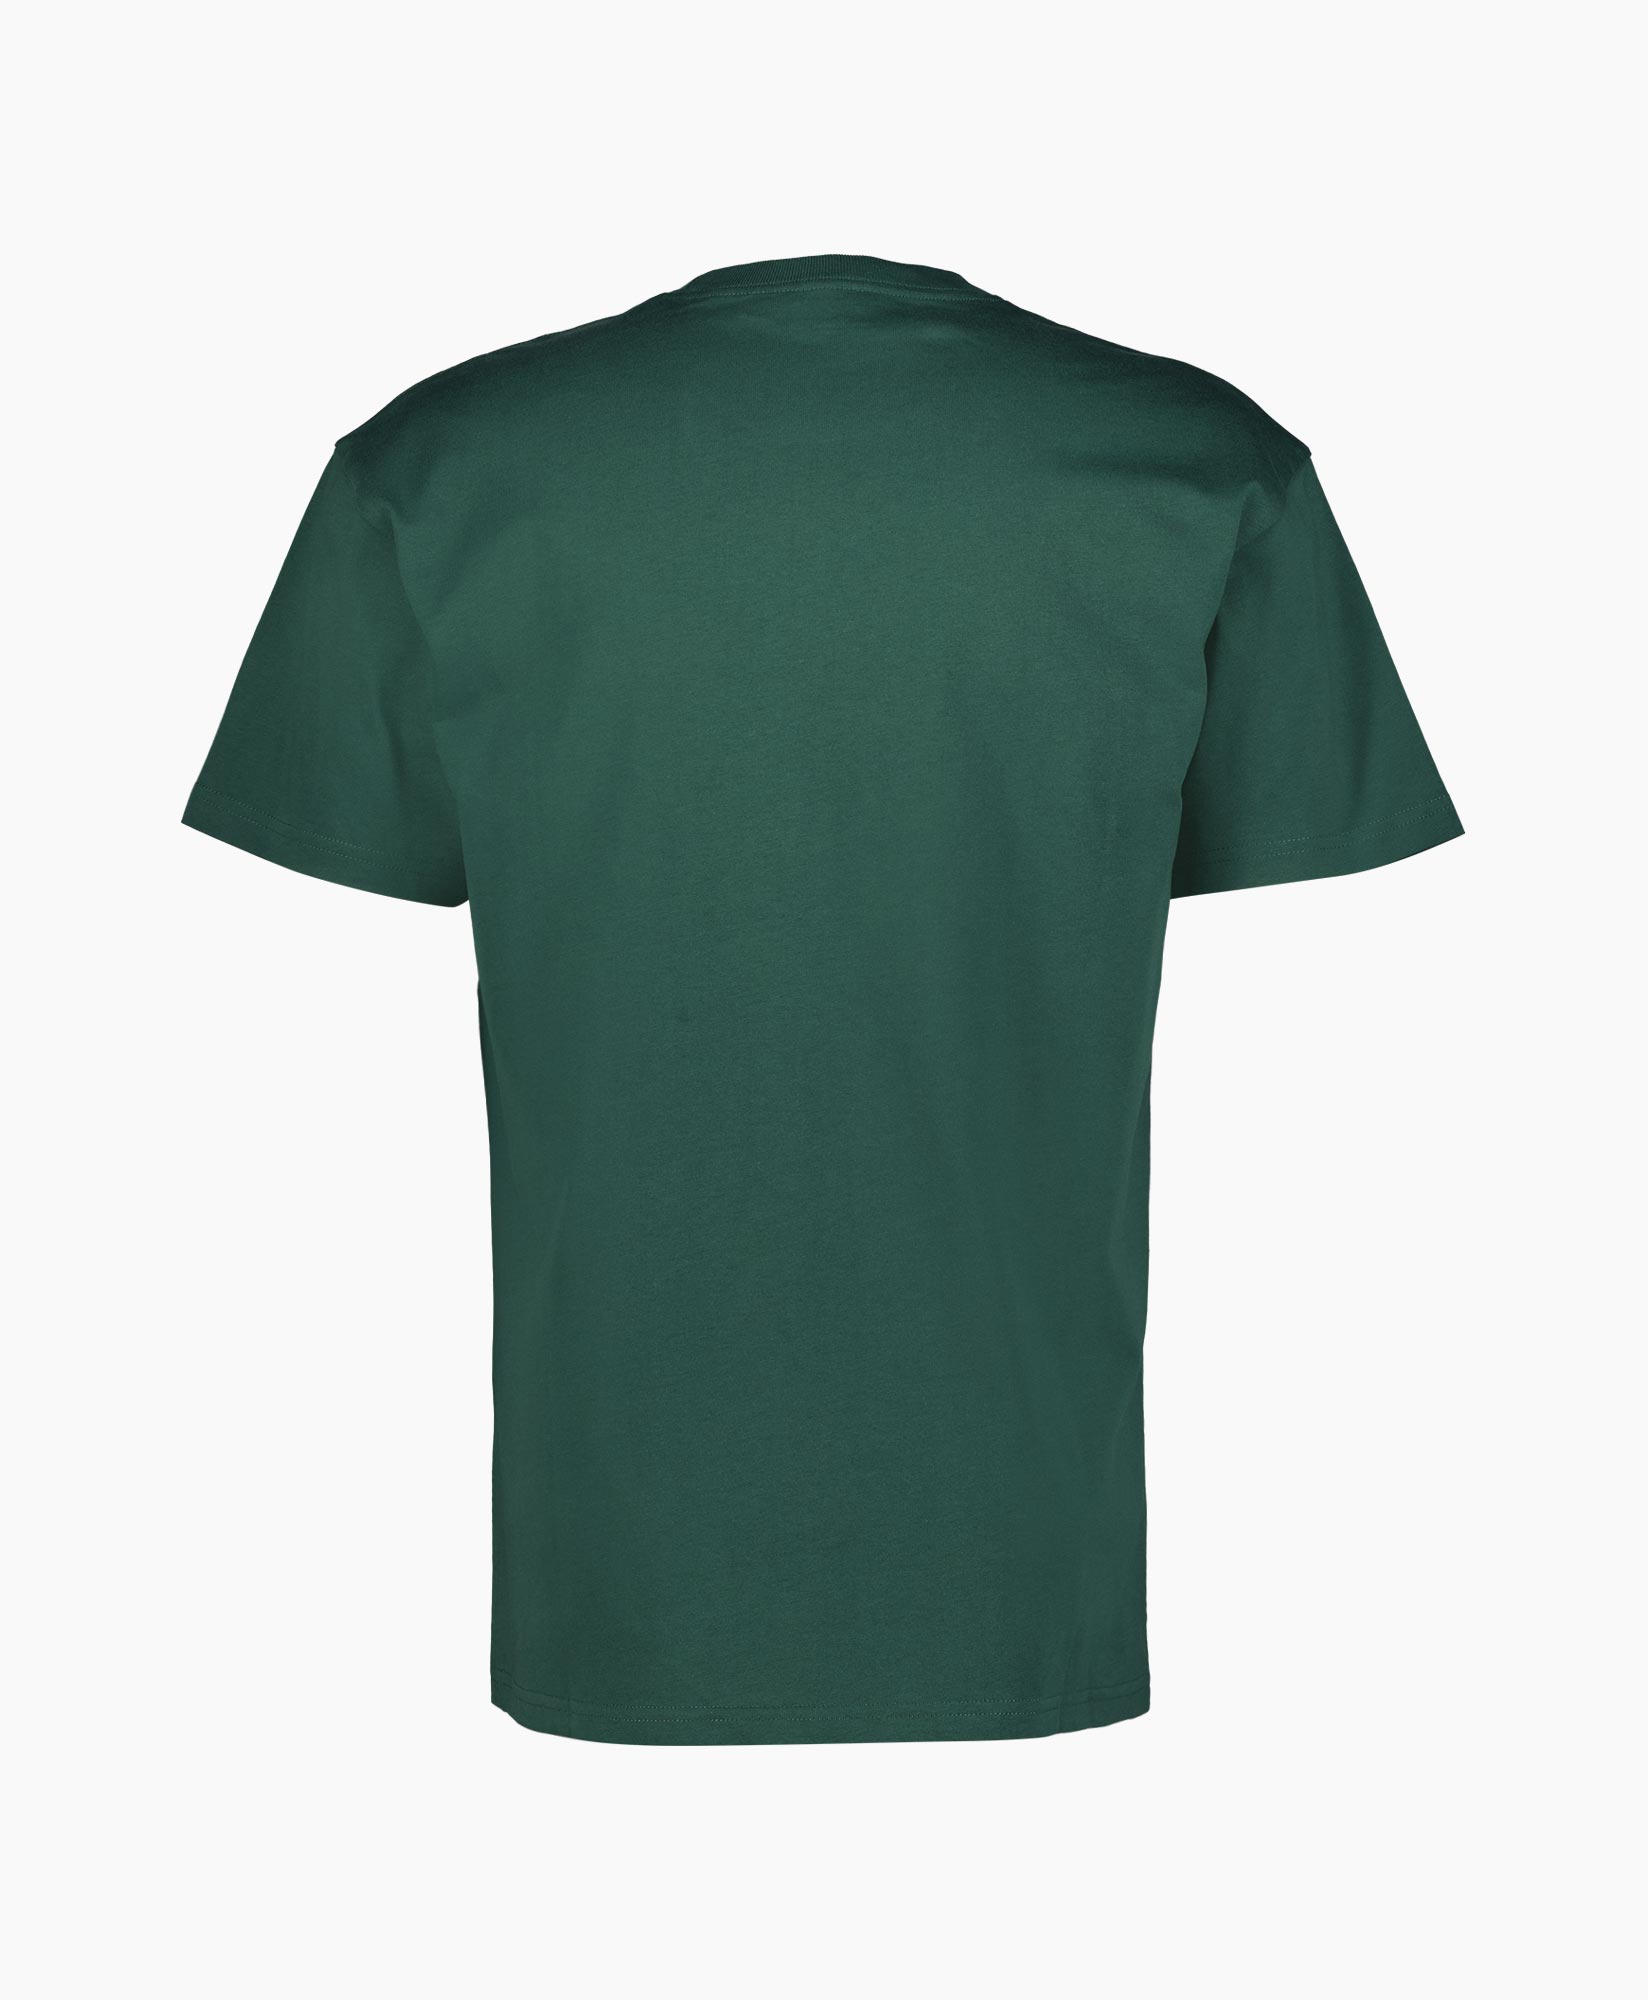 Carhartt Wip T-shirt T-shirt S/s Chase Groen